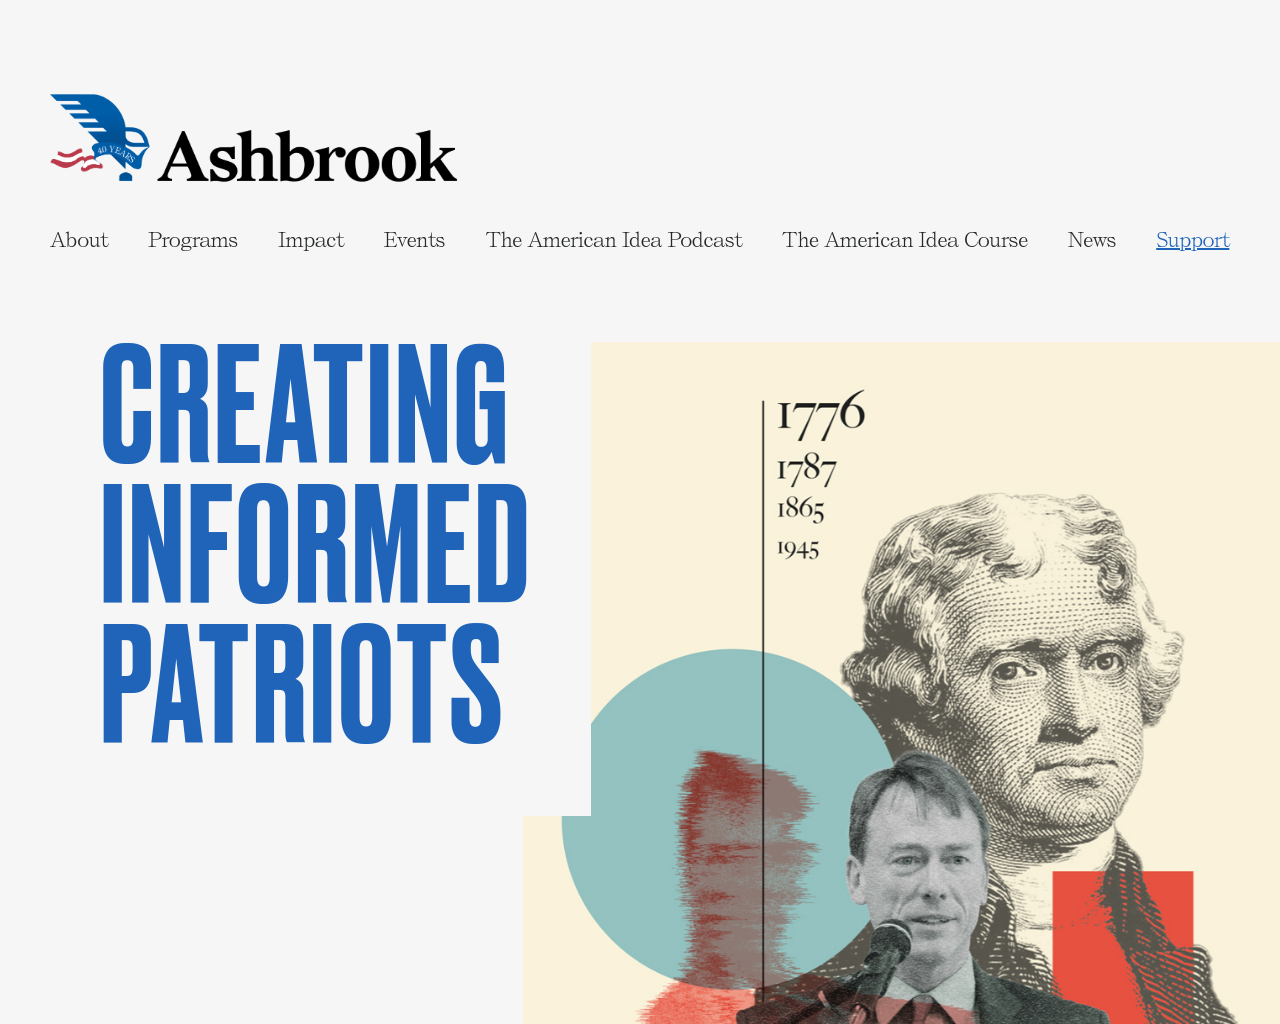 ashbrook.org